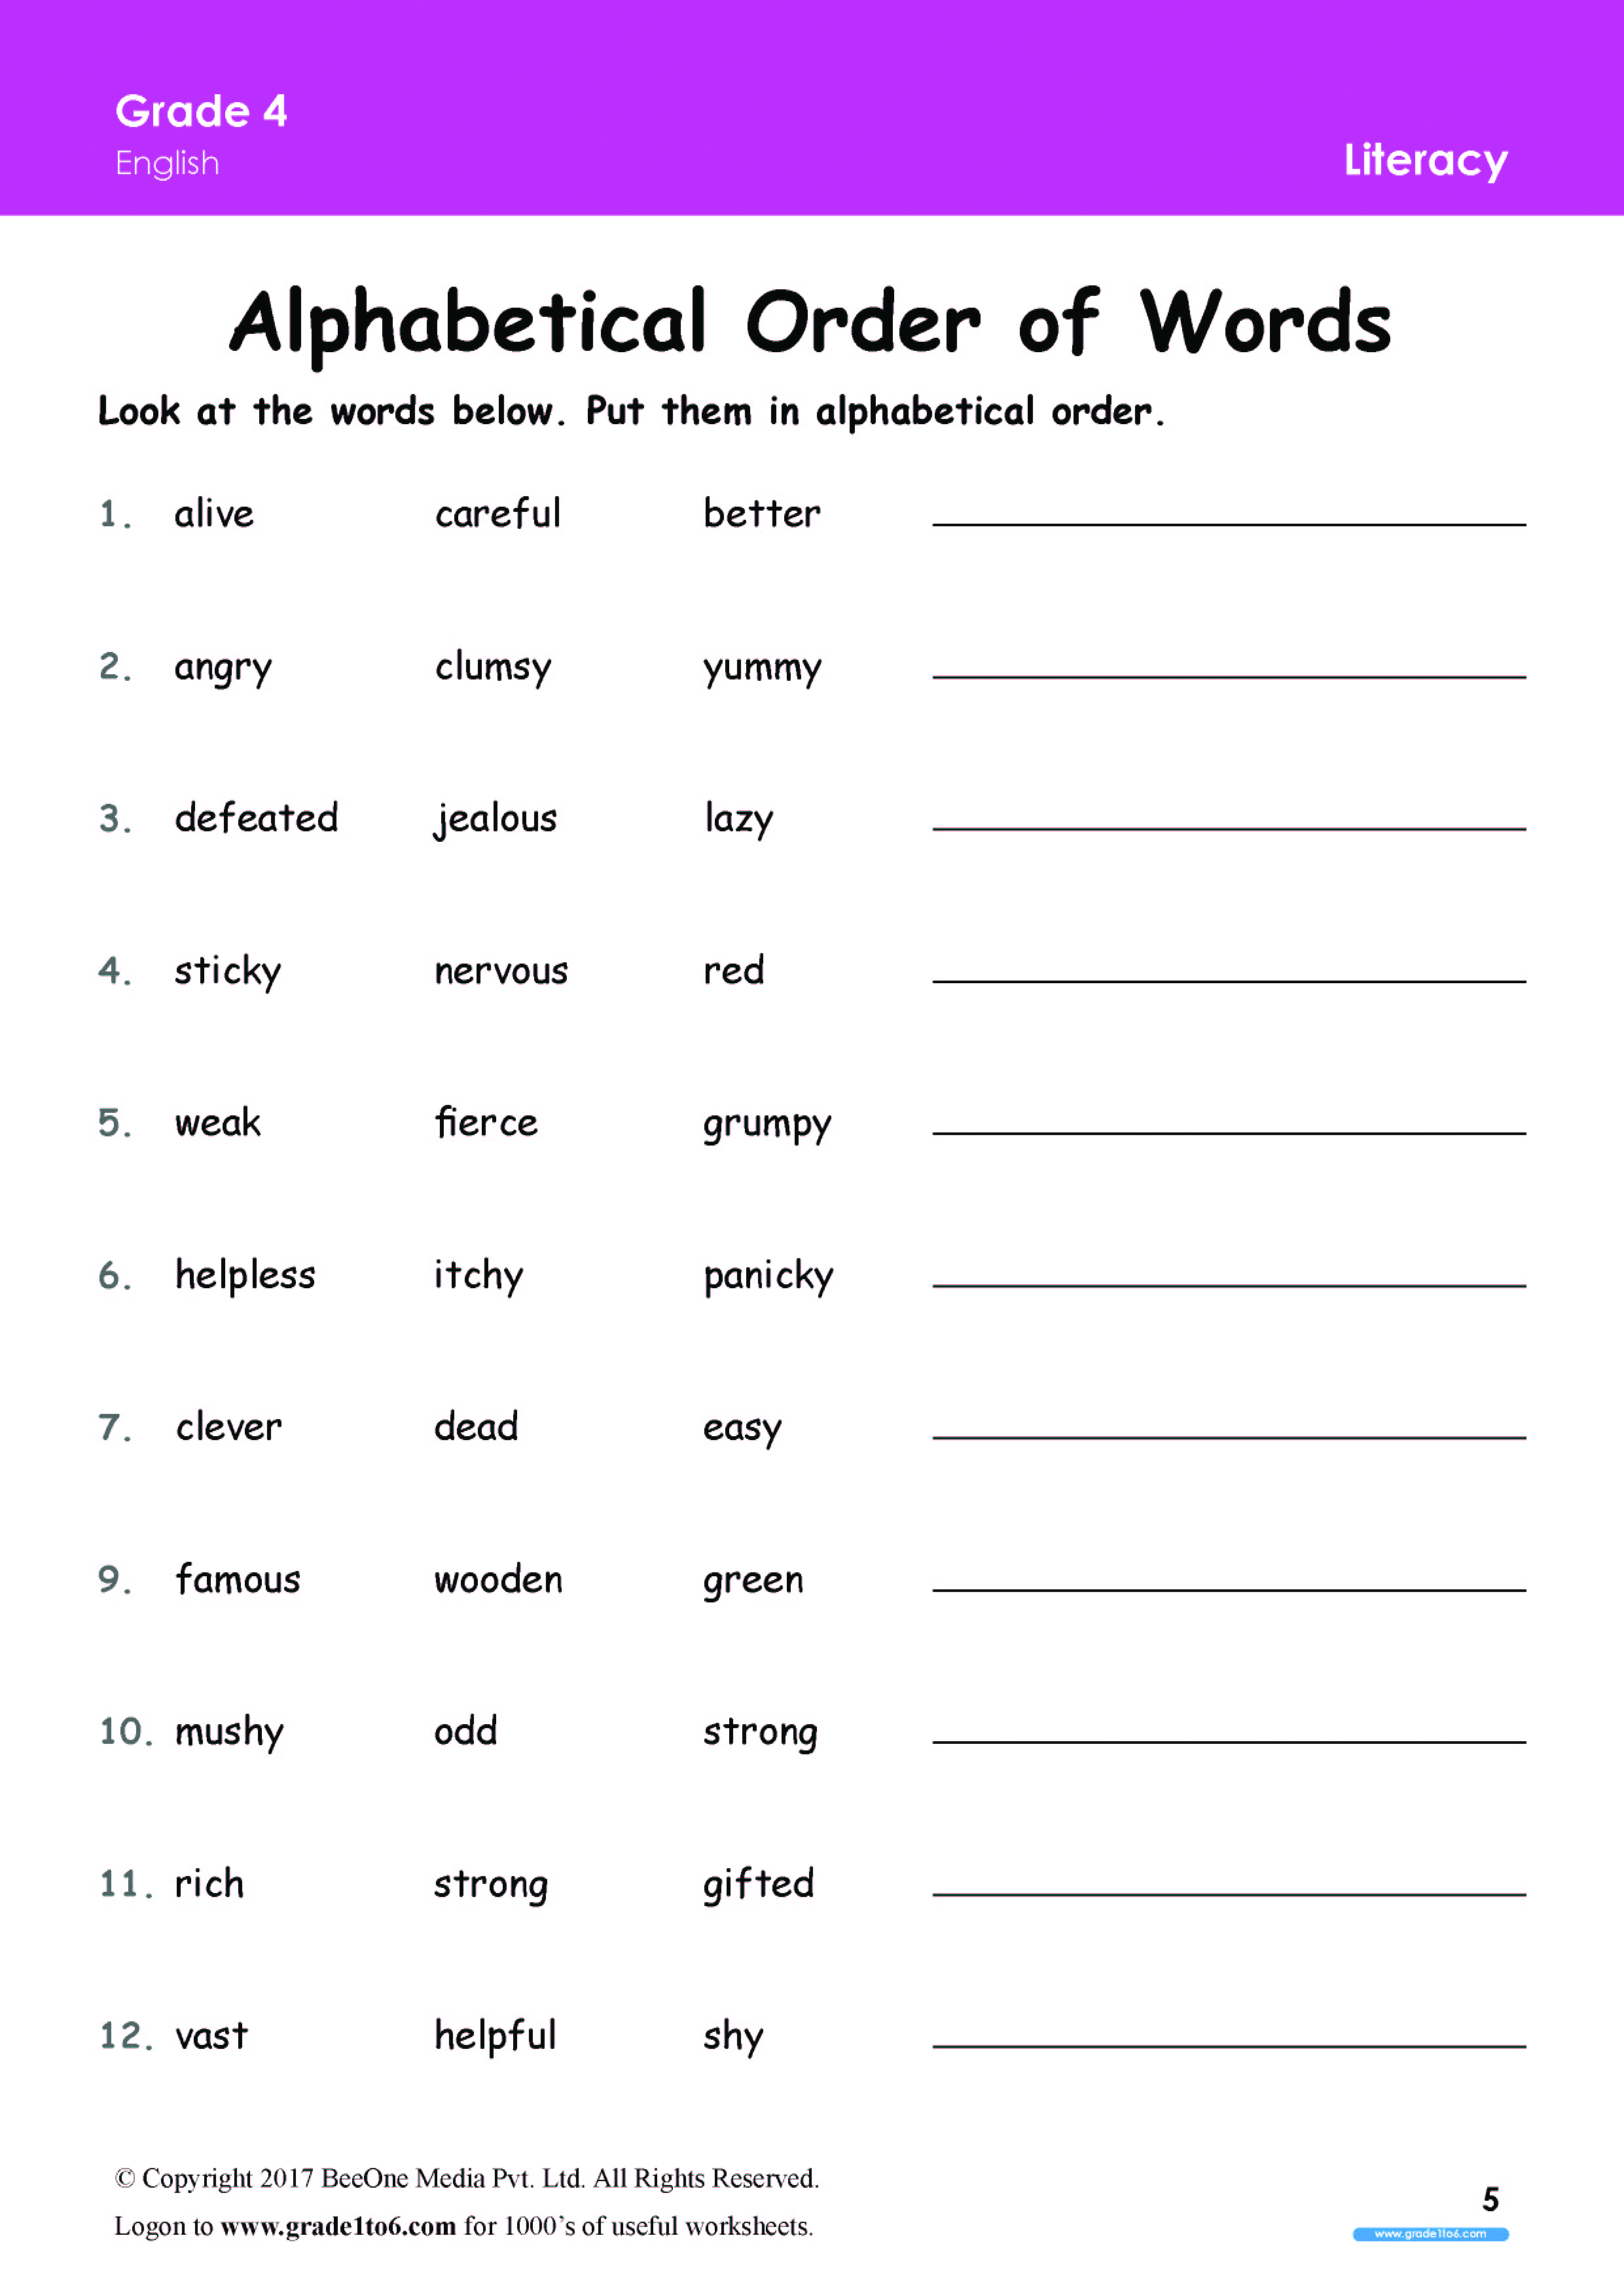 alphabetical-order-worksheets-grade-4-www-grade1to6